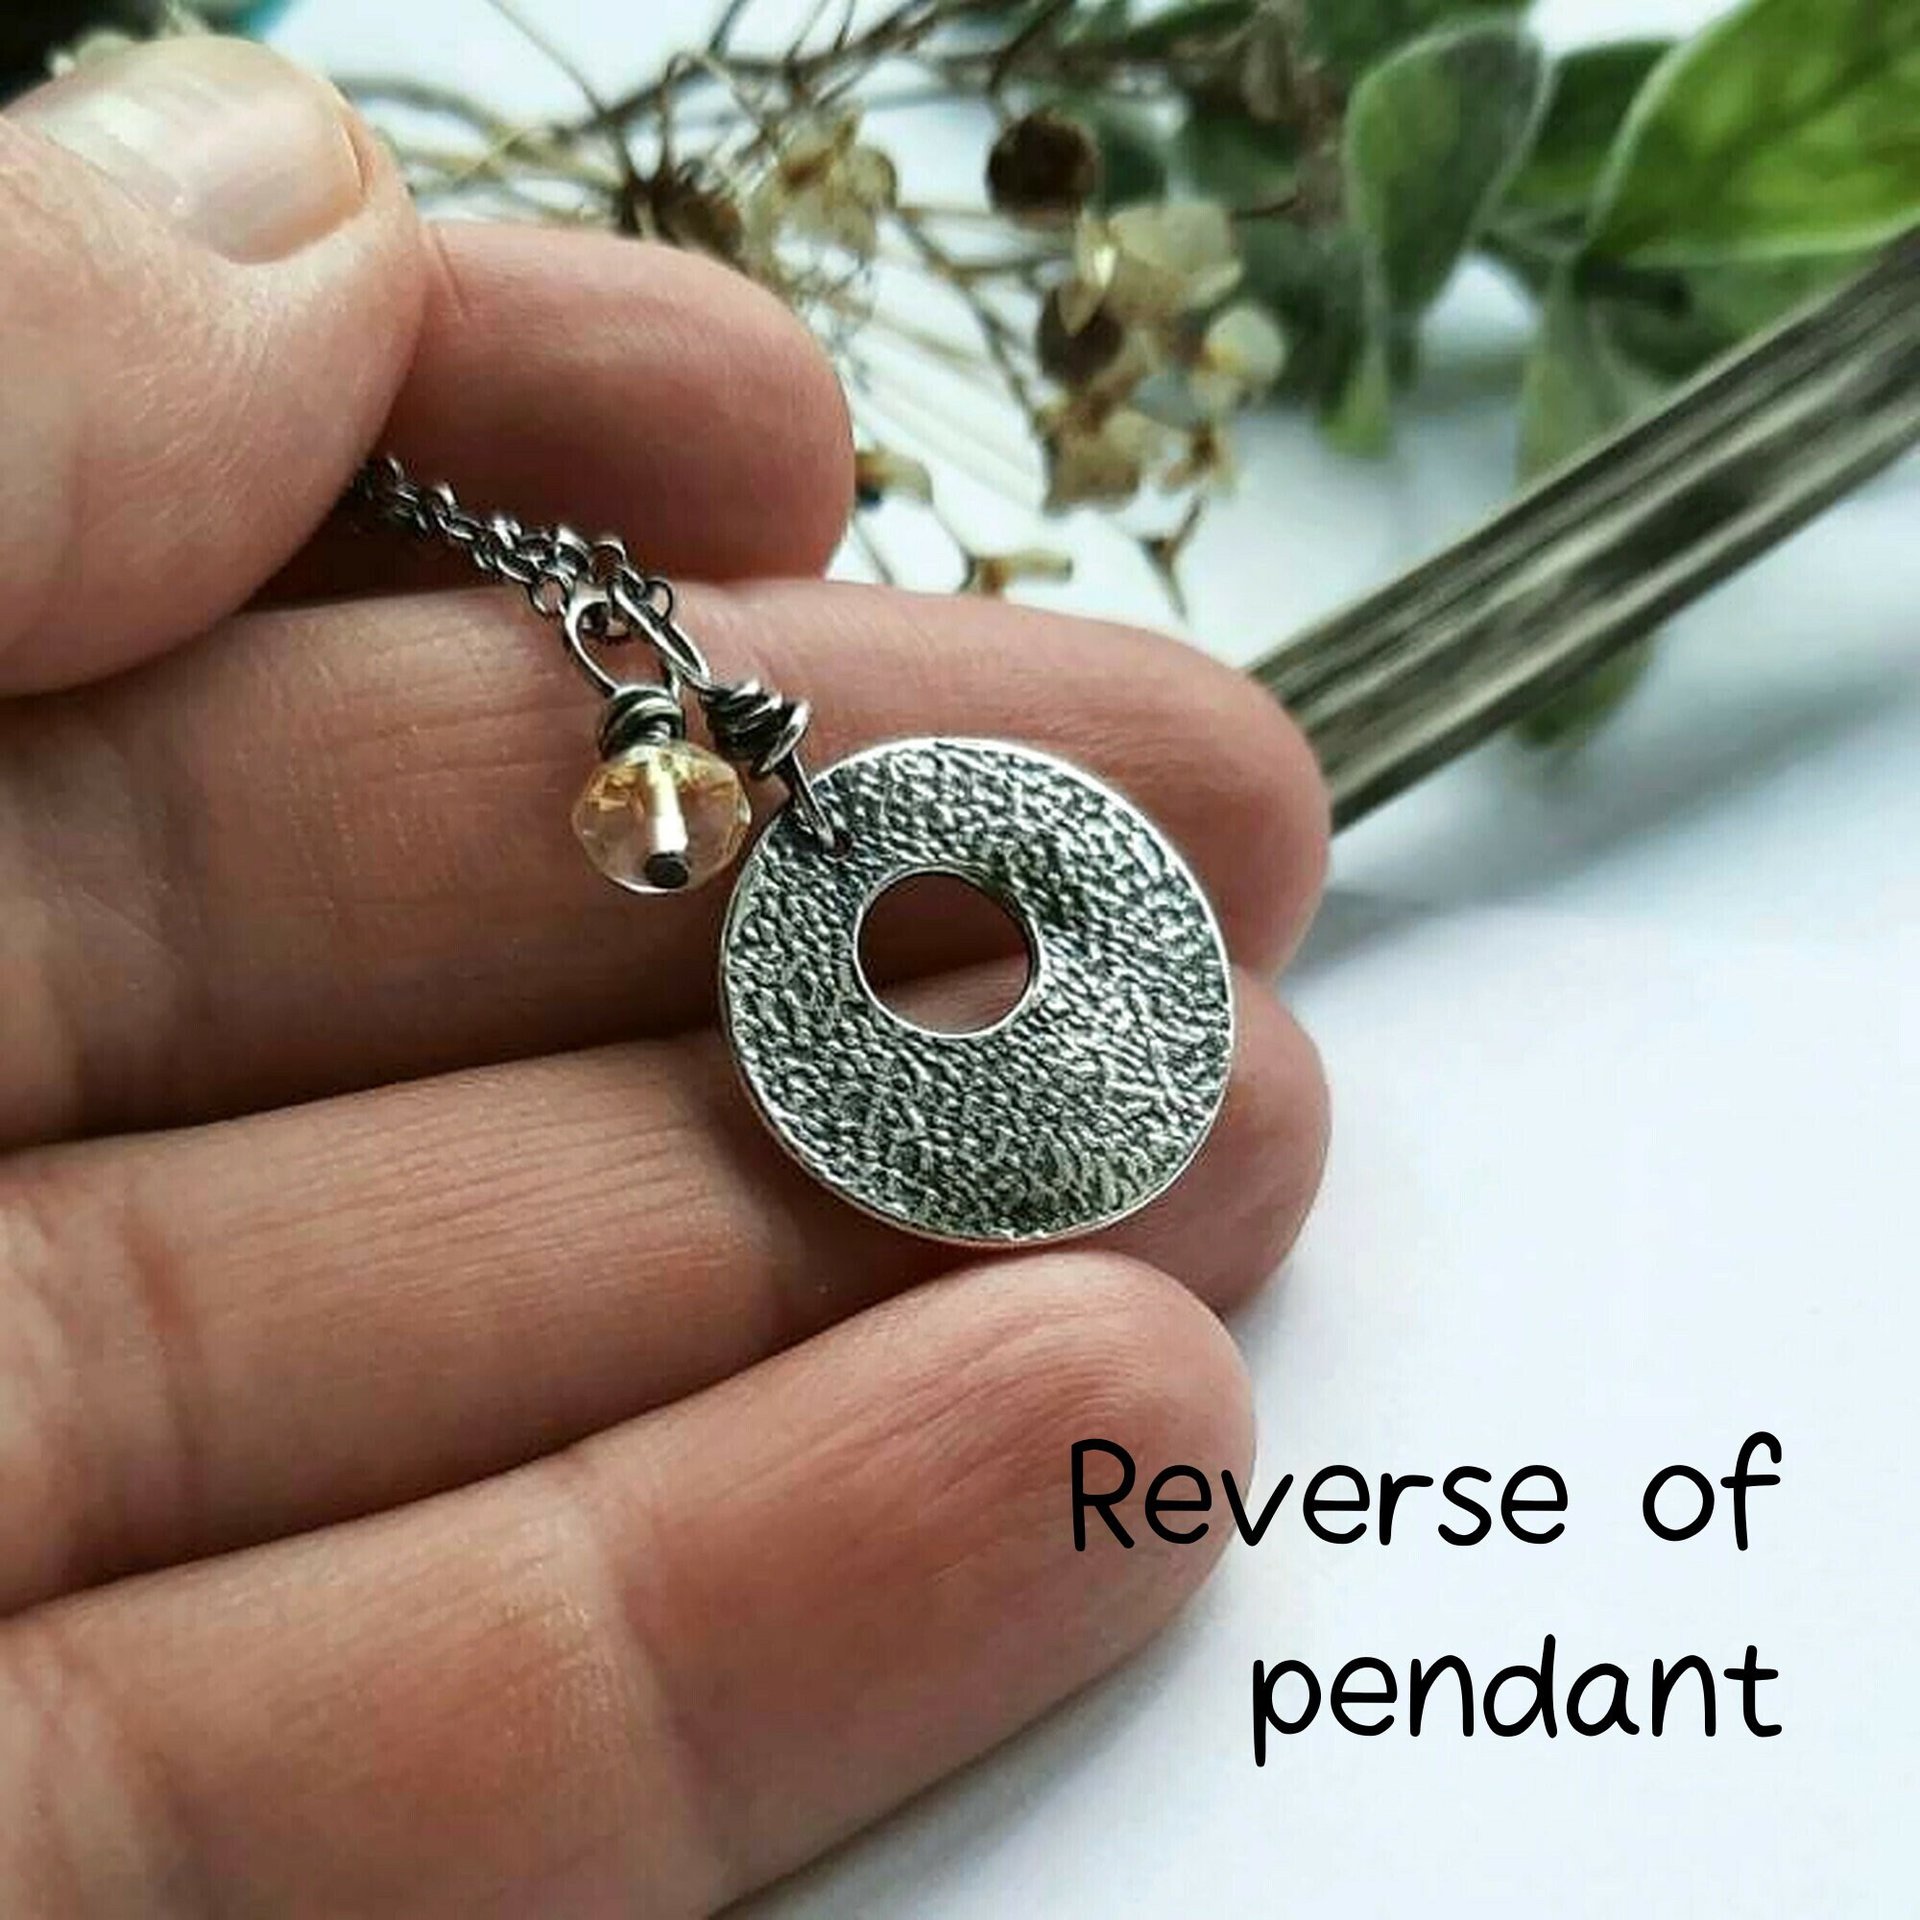 Oxidised Fine Silver Bee Necklace with Citrine Gemstone Charm ~ November Birthstone ~ Handmade by The Tiny Tree Frog Jewellery